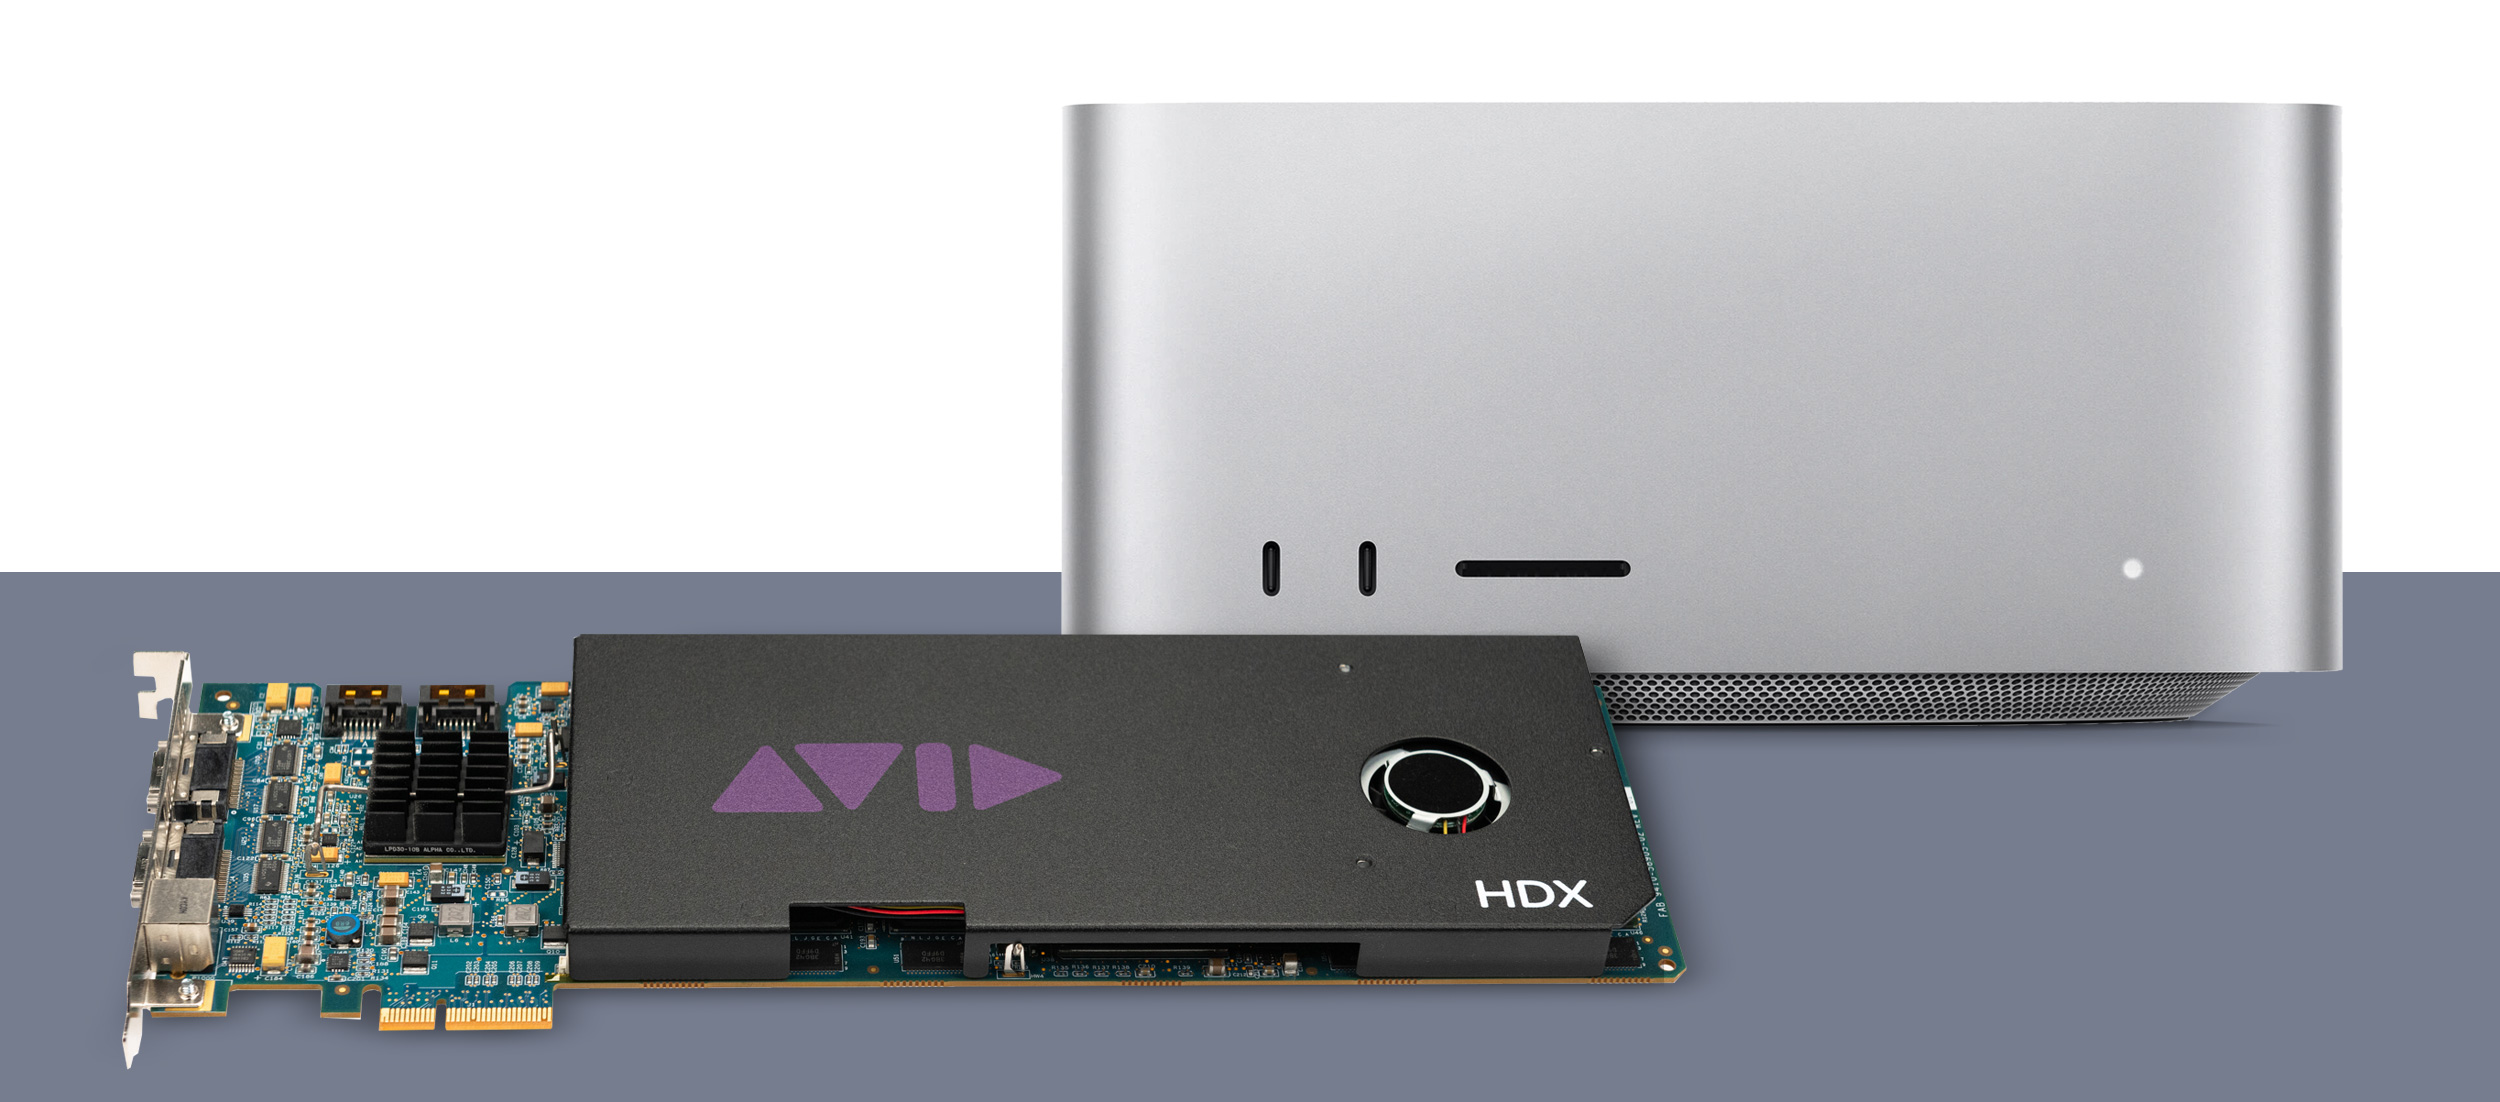 Mac Studio with Avid Pro Tools | HDX Card